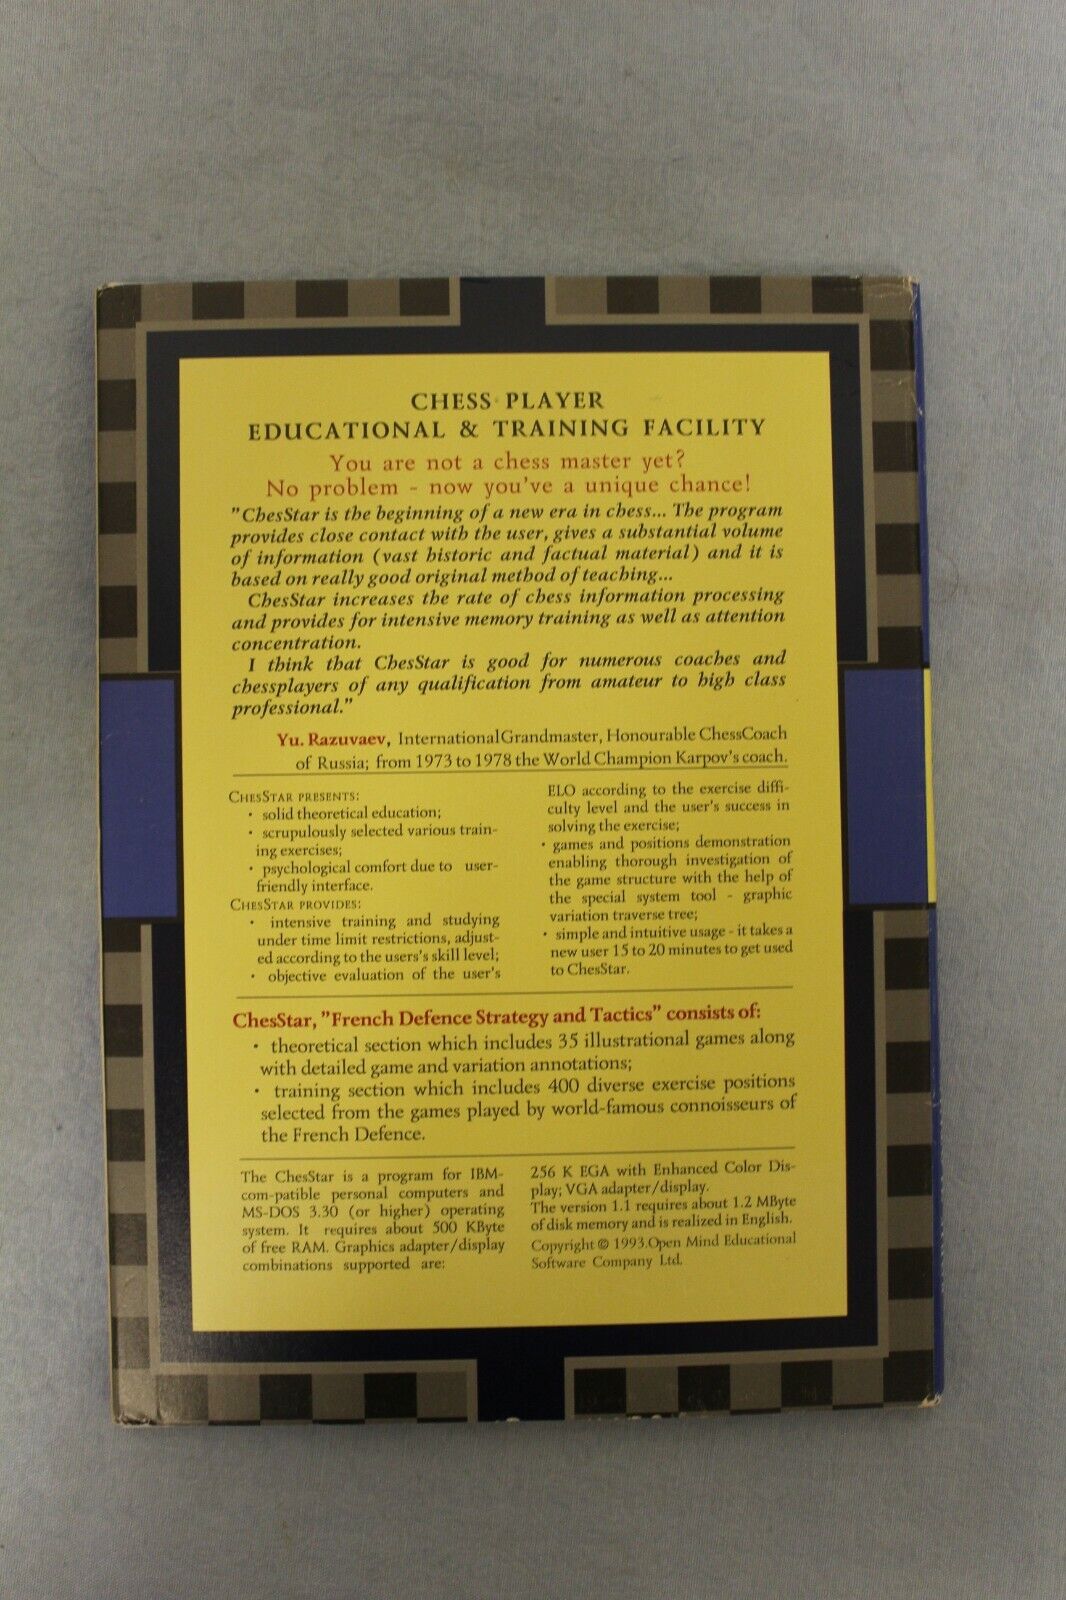 11147.Chess Computer Program on Floppy Disk 3.5: French Defence. Boris Zlotnik. 1993